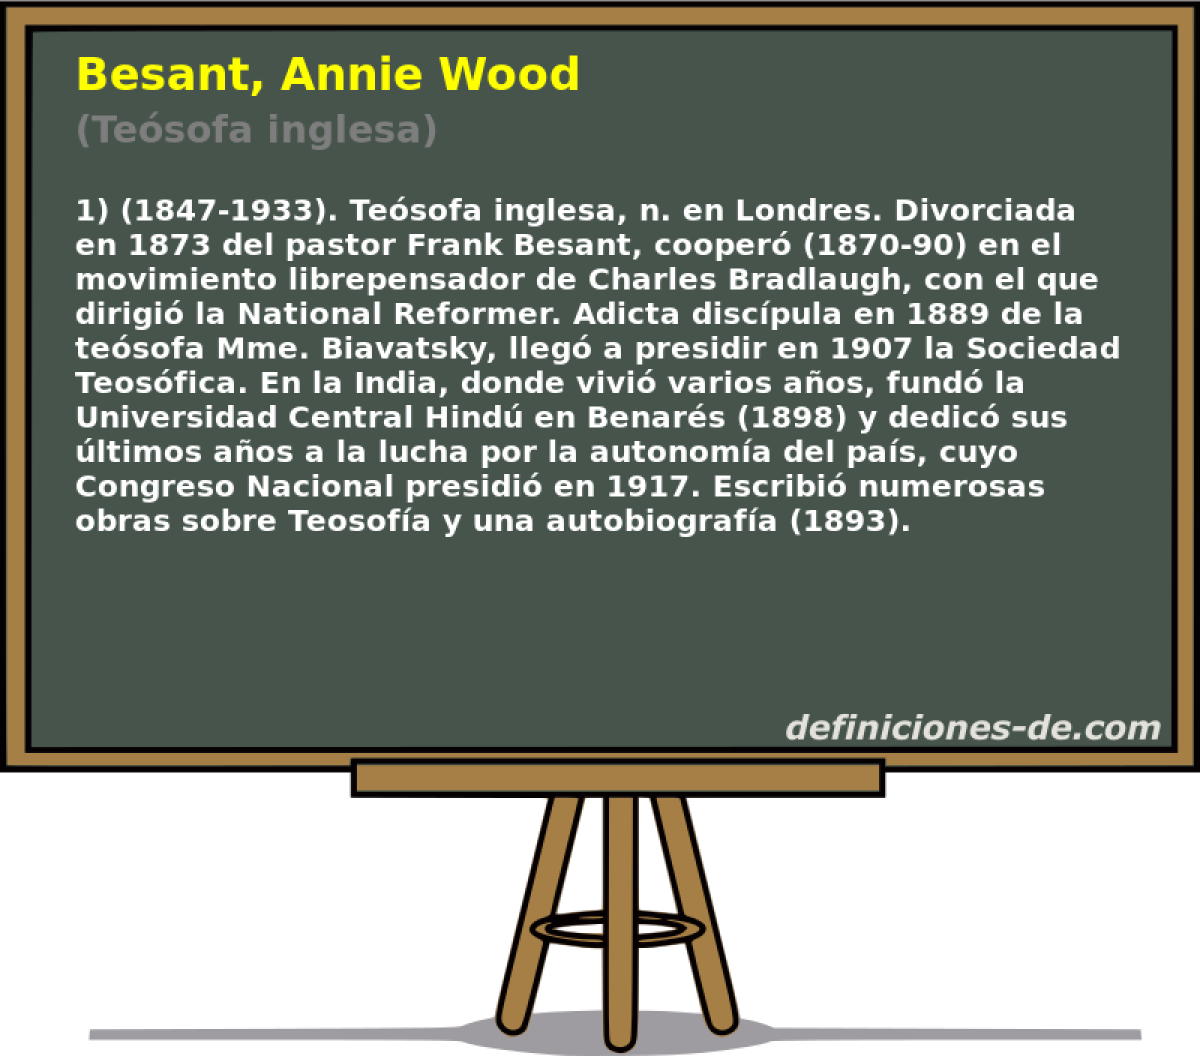 Besant, Annie Wood (Tesofa inglesa)